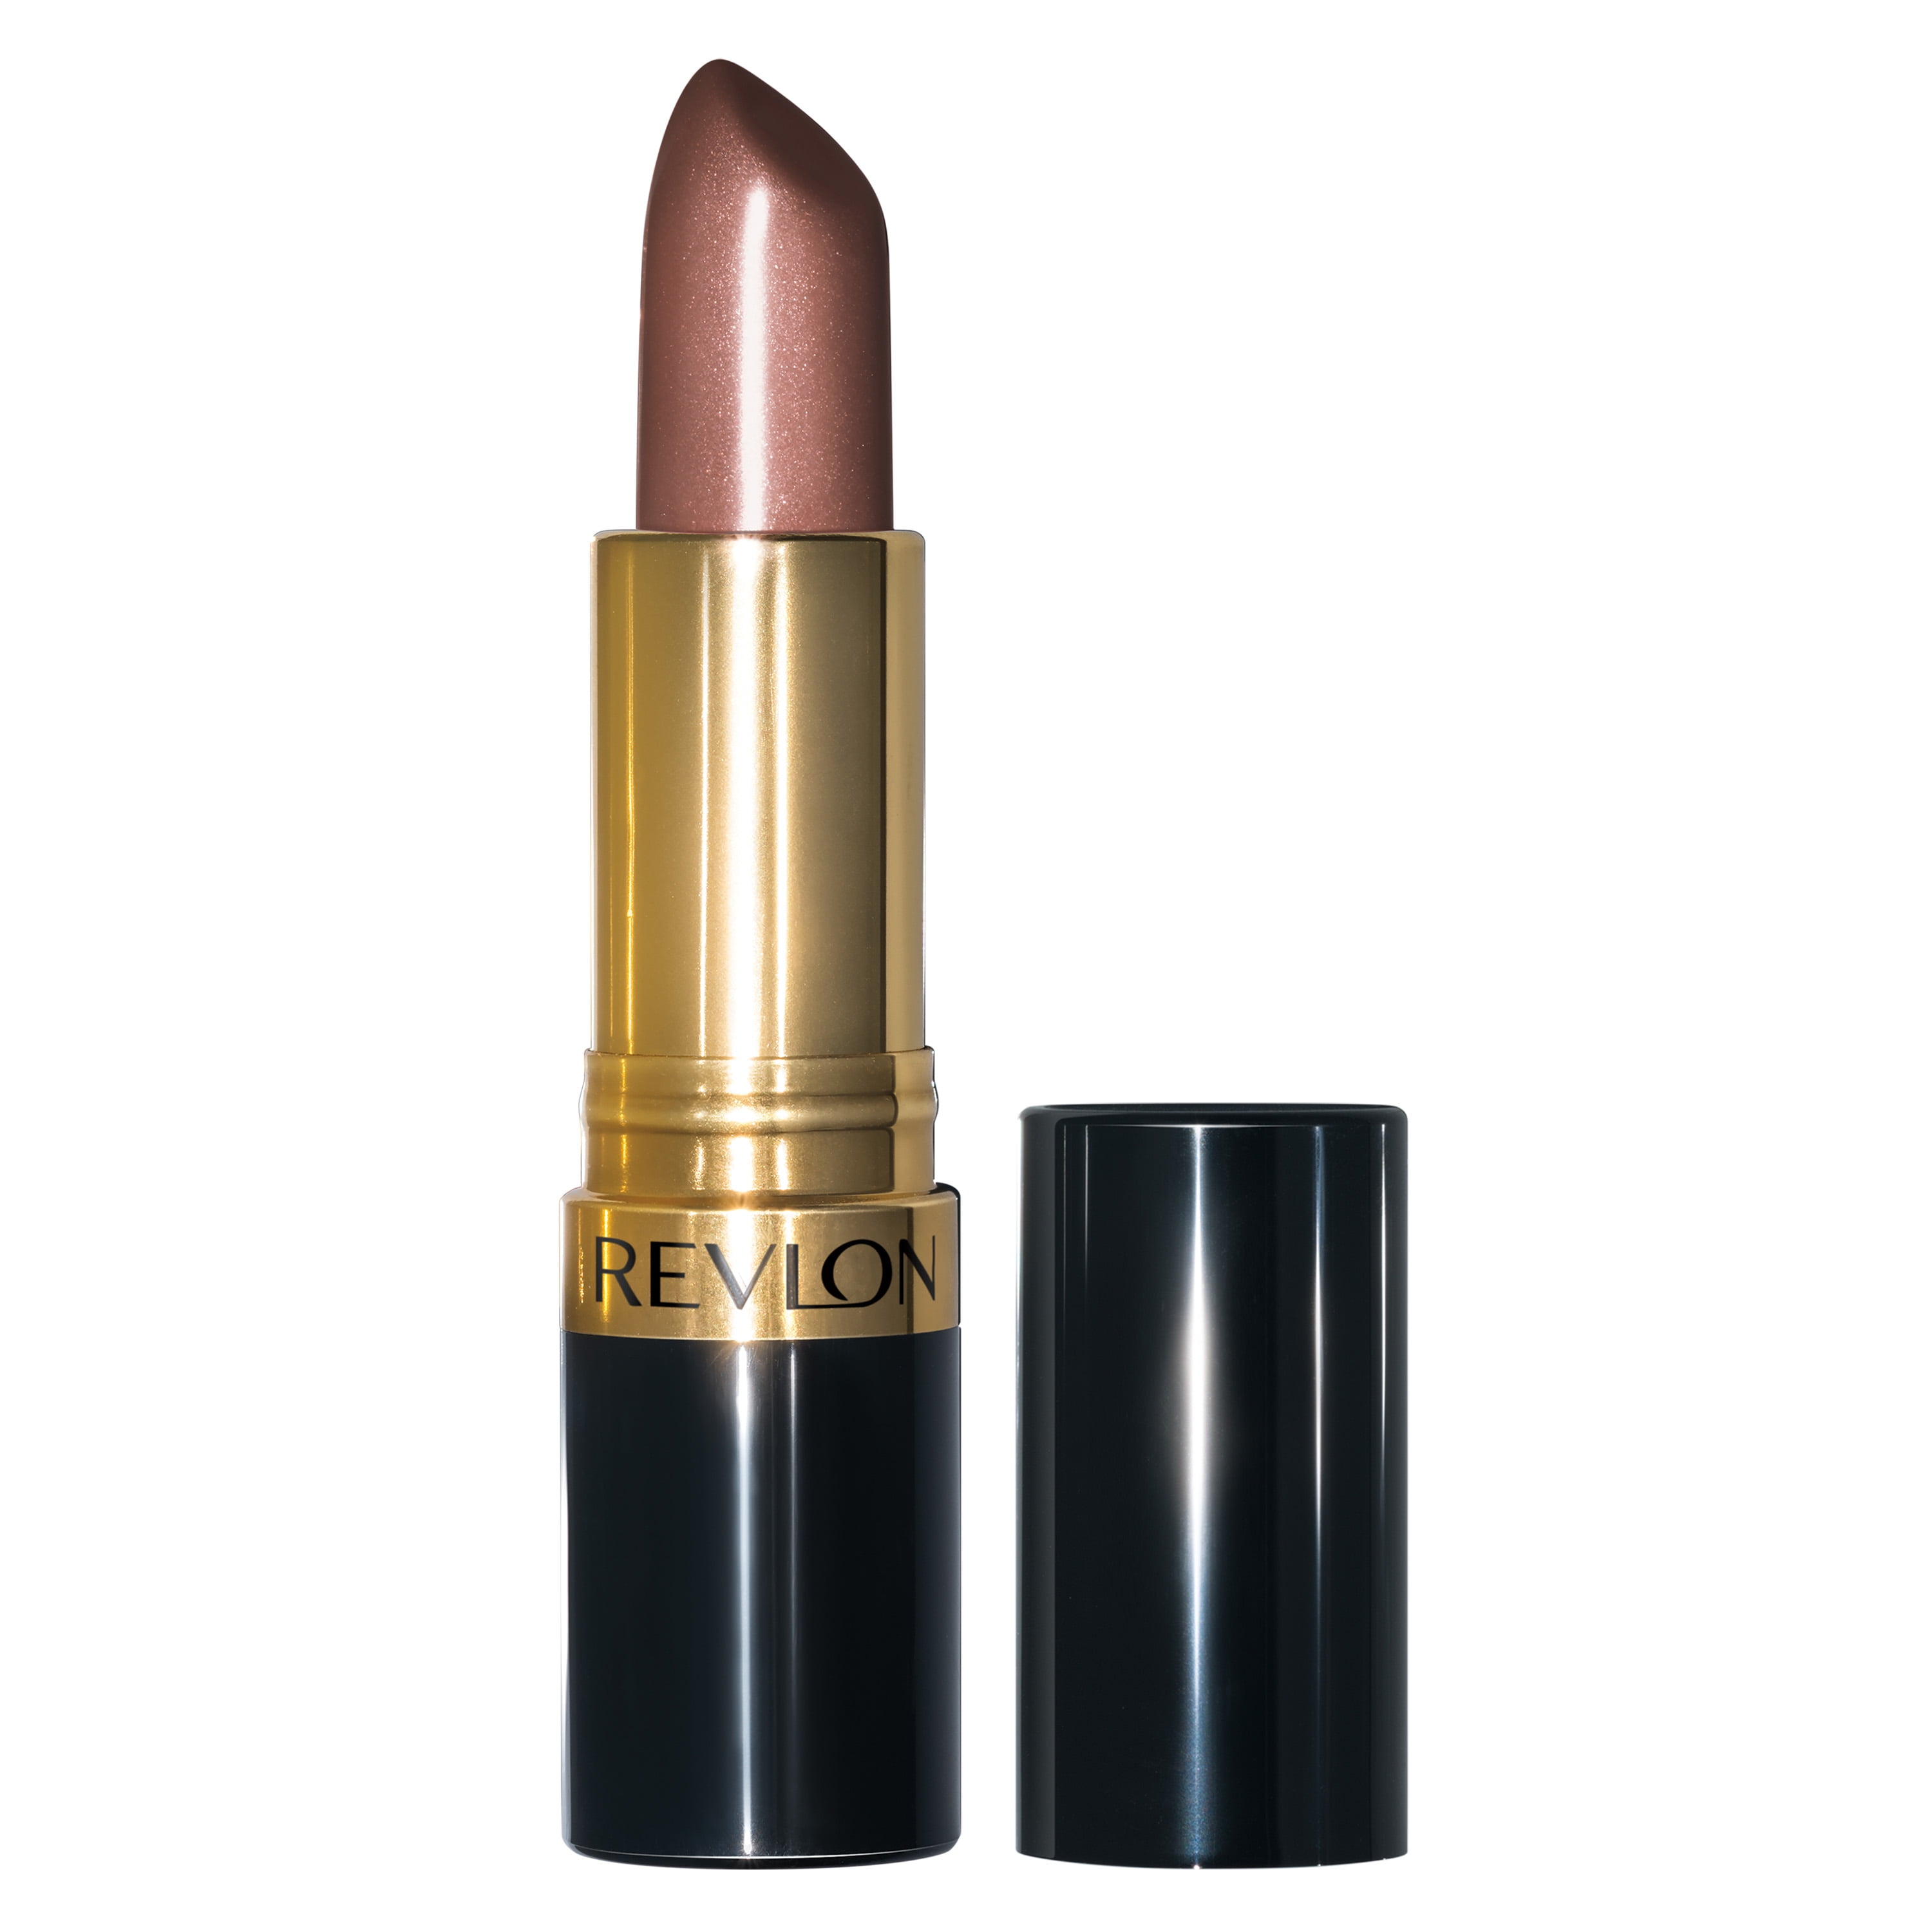 Revlon Super Lustrous Lipstick, Pearl Finish, High Impact Lipcolor with Moisturizing Creamy Formula, Infused with Vitamin E and Avocado Oil, 103 Caramel Glace, 0.15 oz